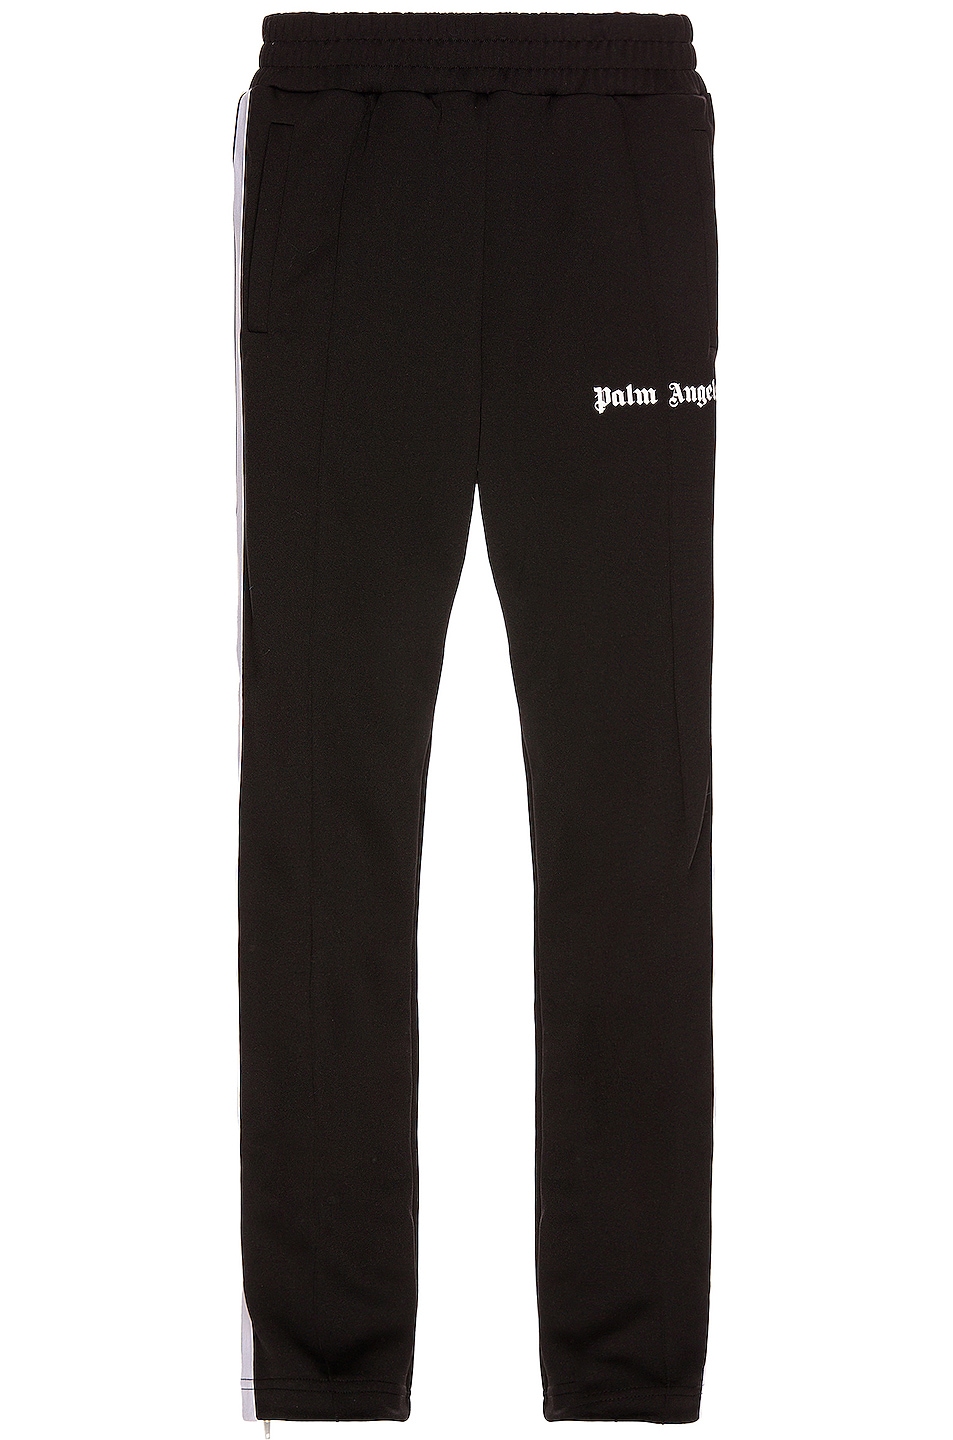 Palm Angels Classic Track Pants Skinny in Black & White | FWRD